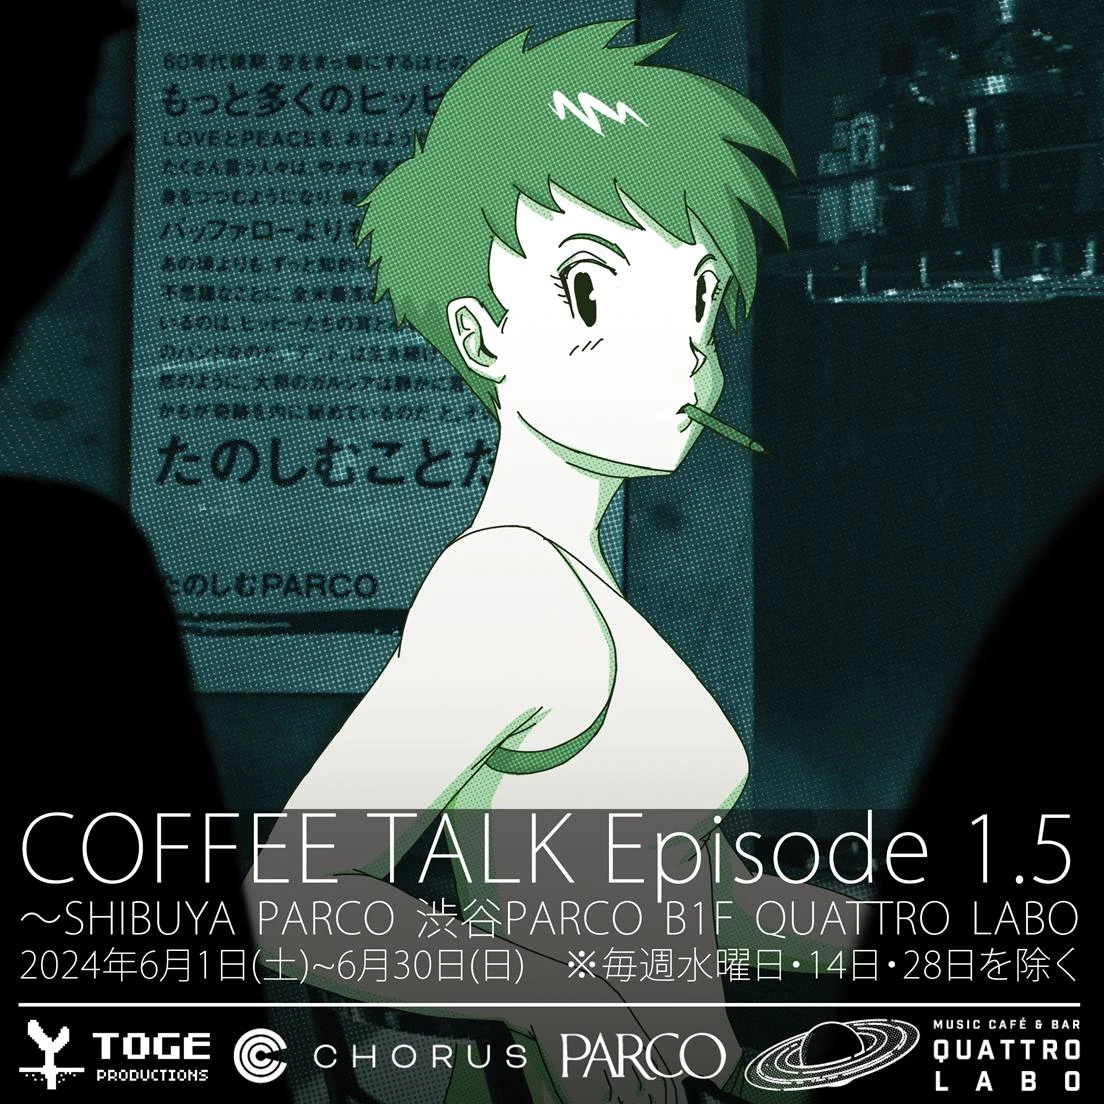 「COFFEE TALK Episode 1.5～SHIBUYA PARCO」